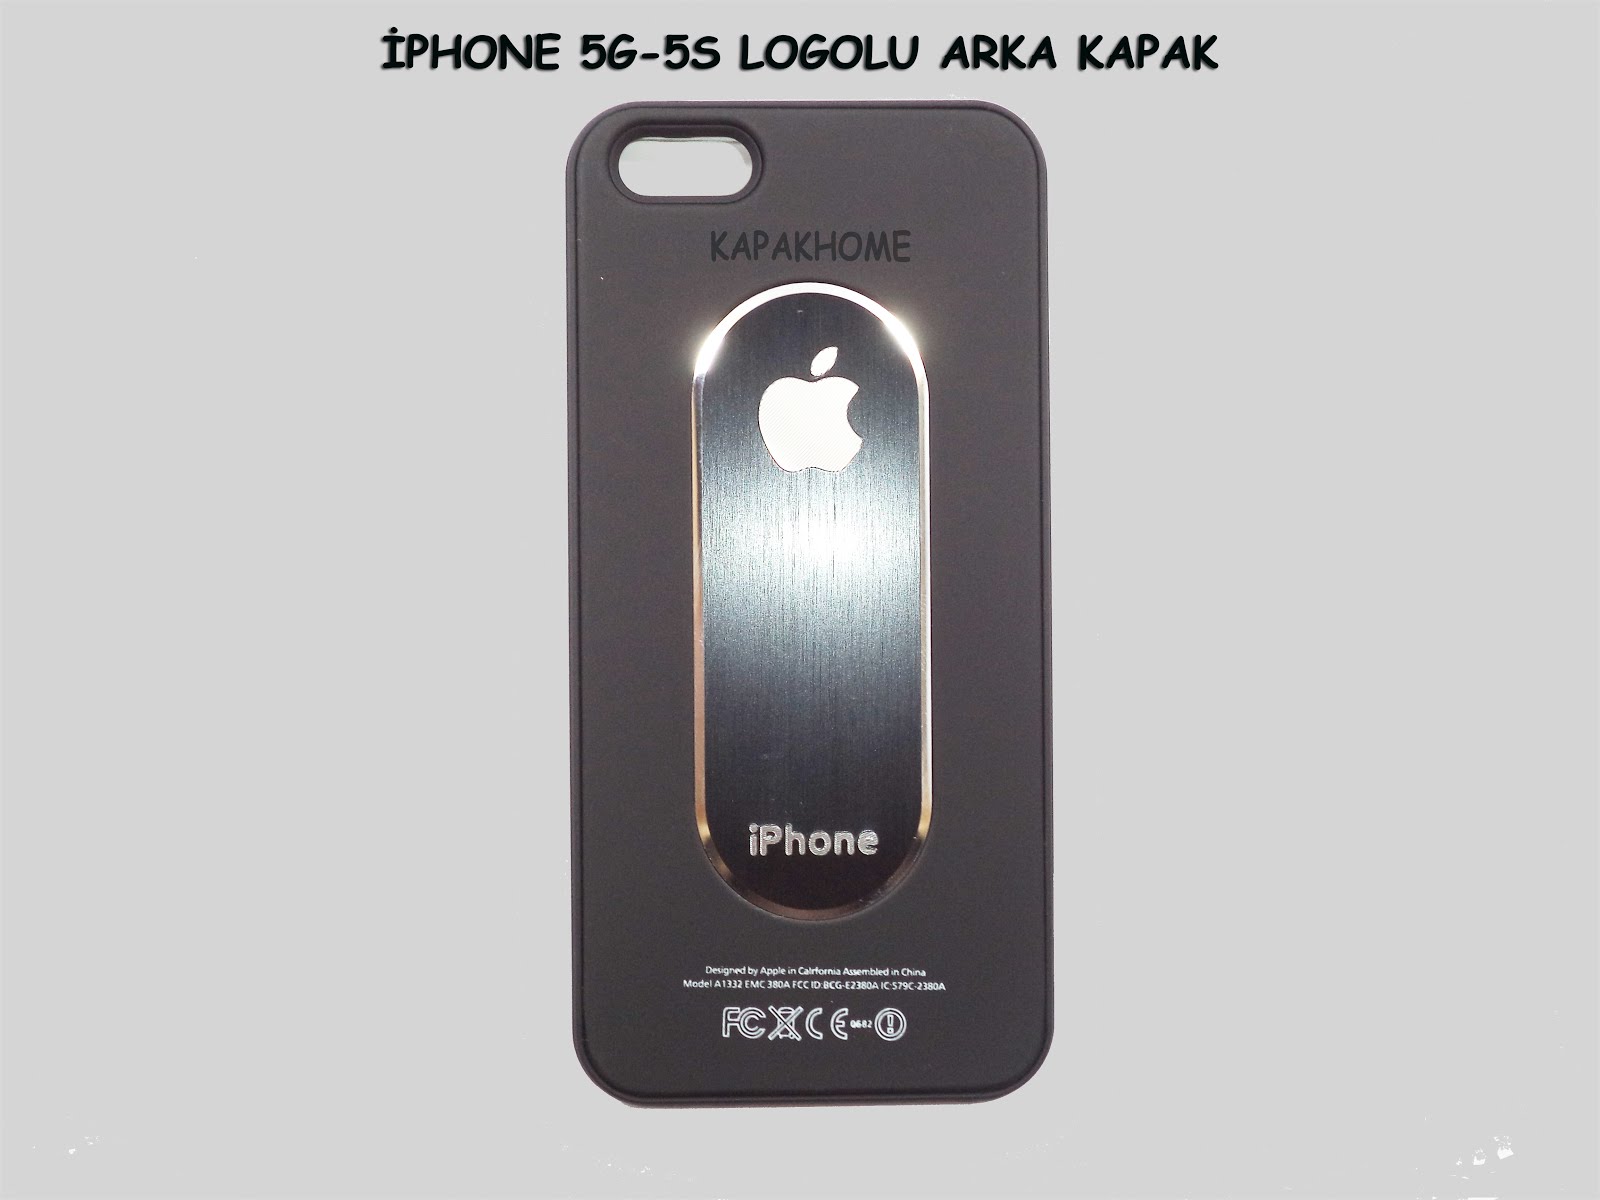 İphone 5G-5S logolu Arka Kapak